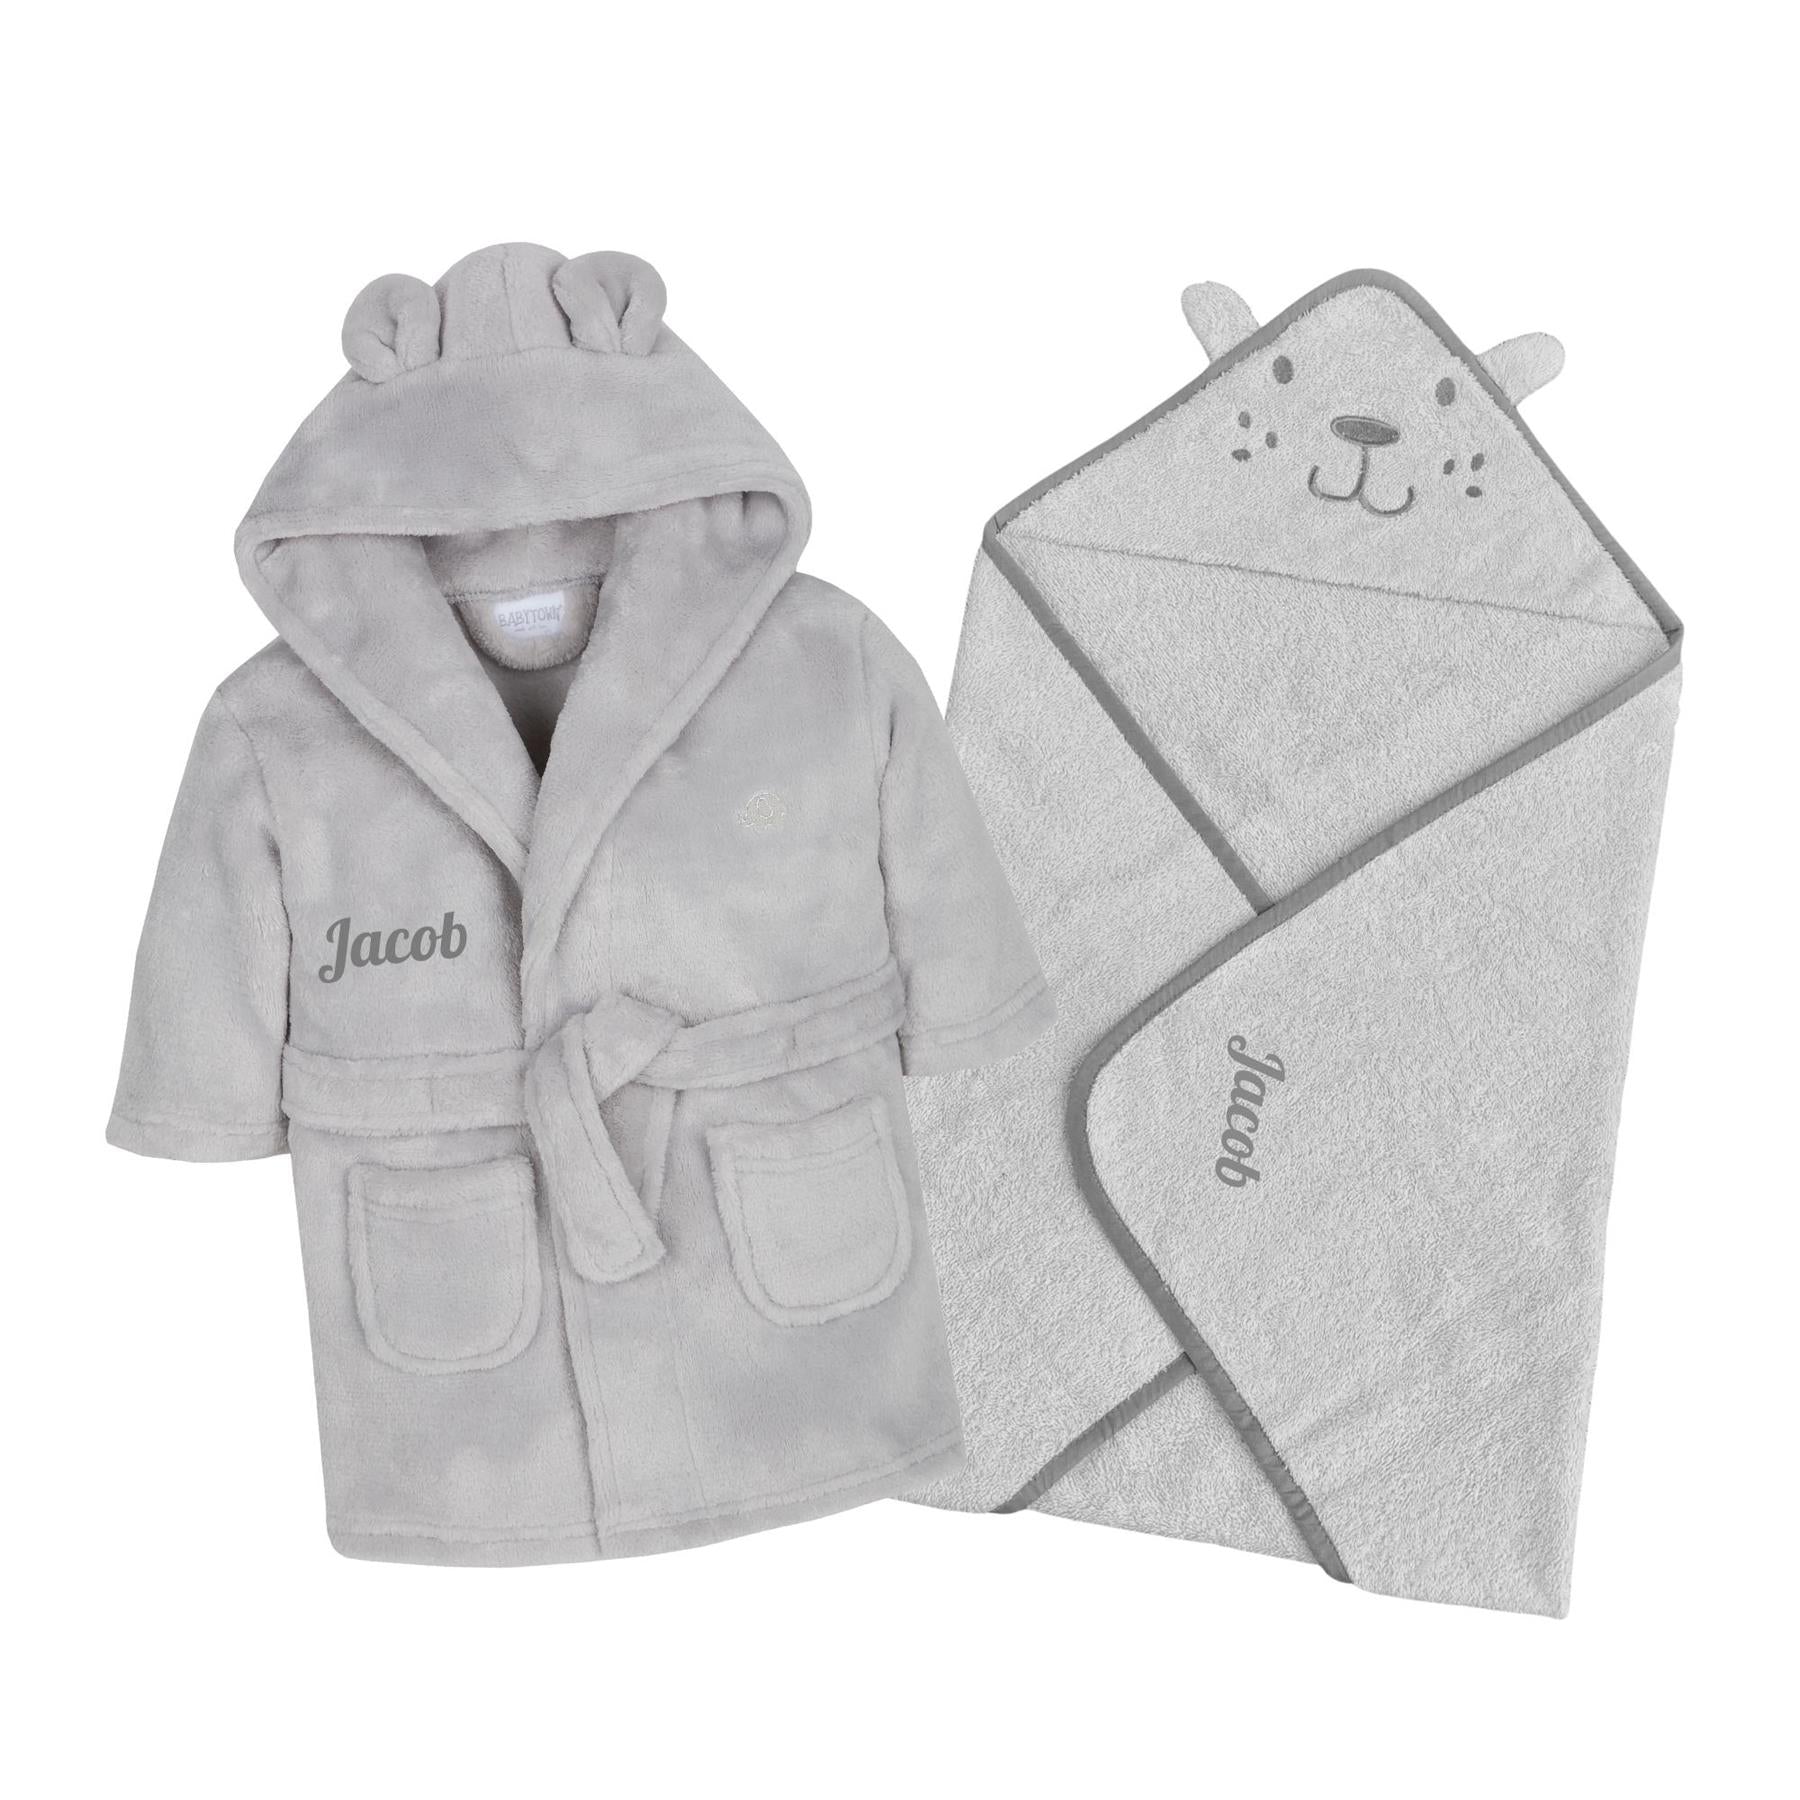 Baby White & Grey Towel Set